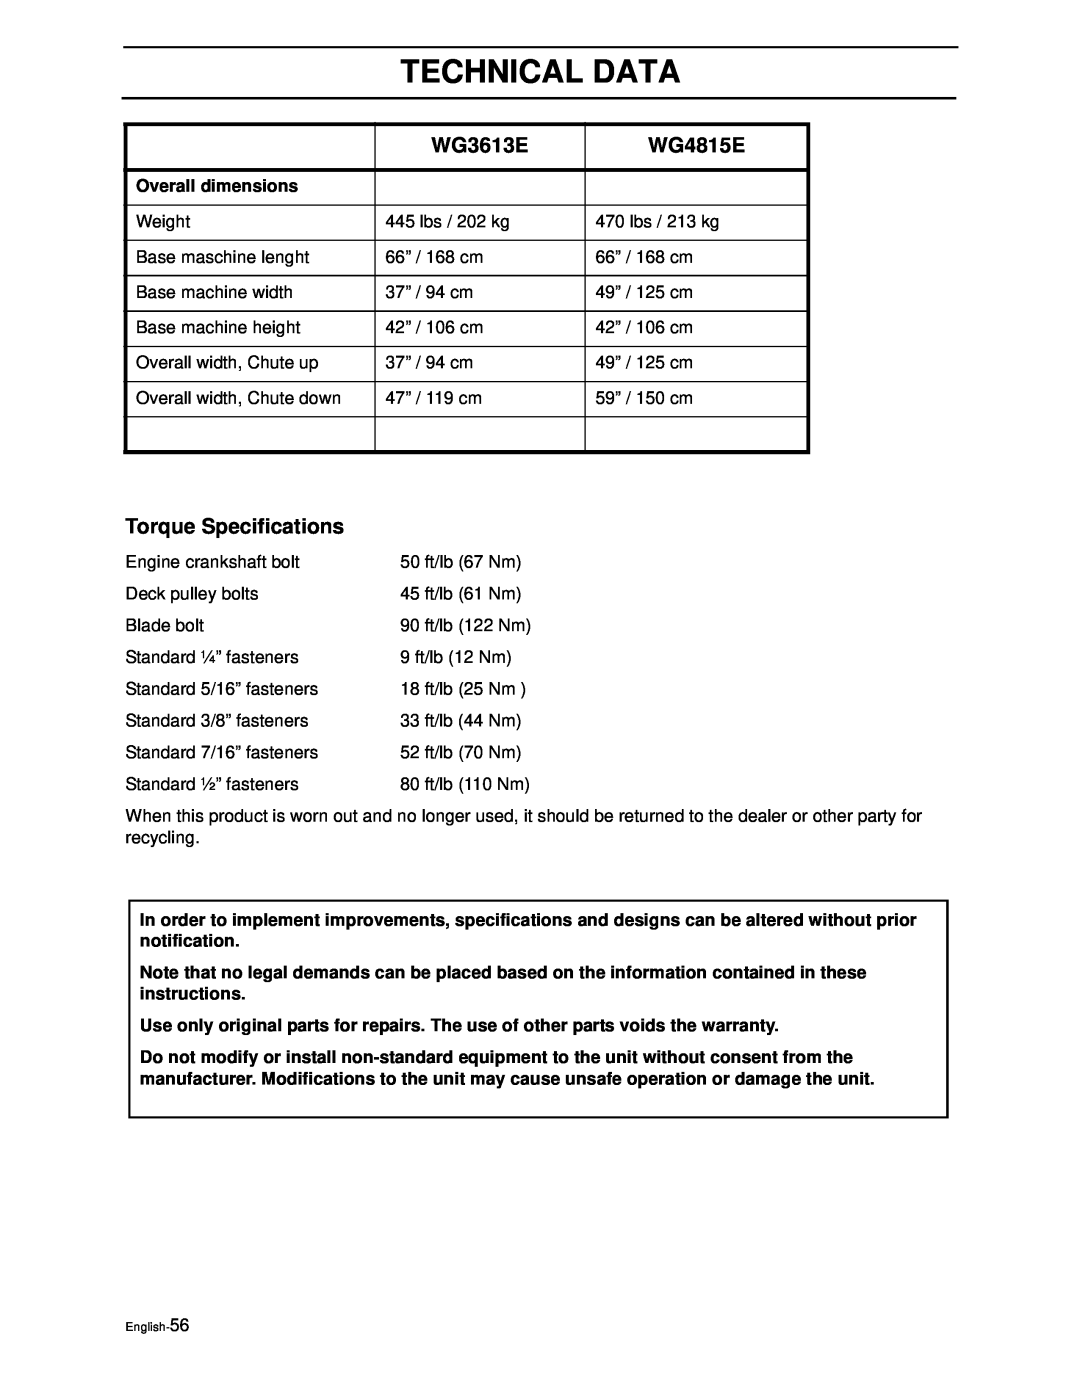 Husqvarna WG4815E, WG3613E manual Torque Specifications, Technical Data 